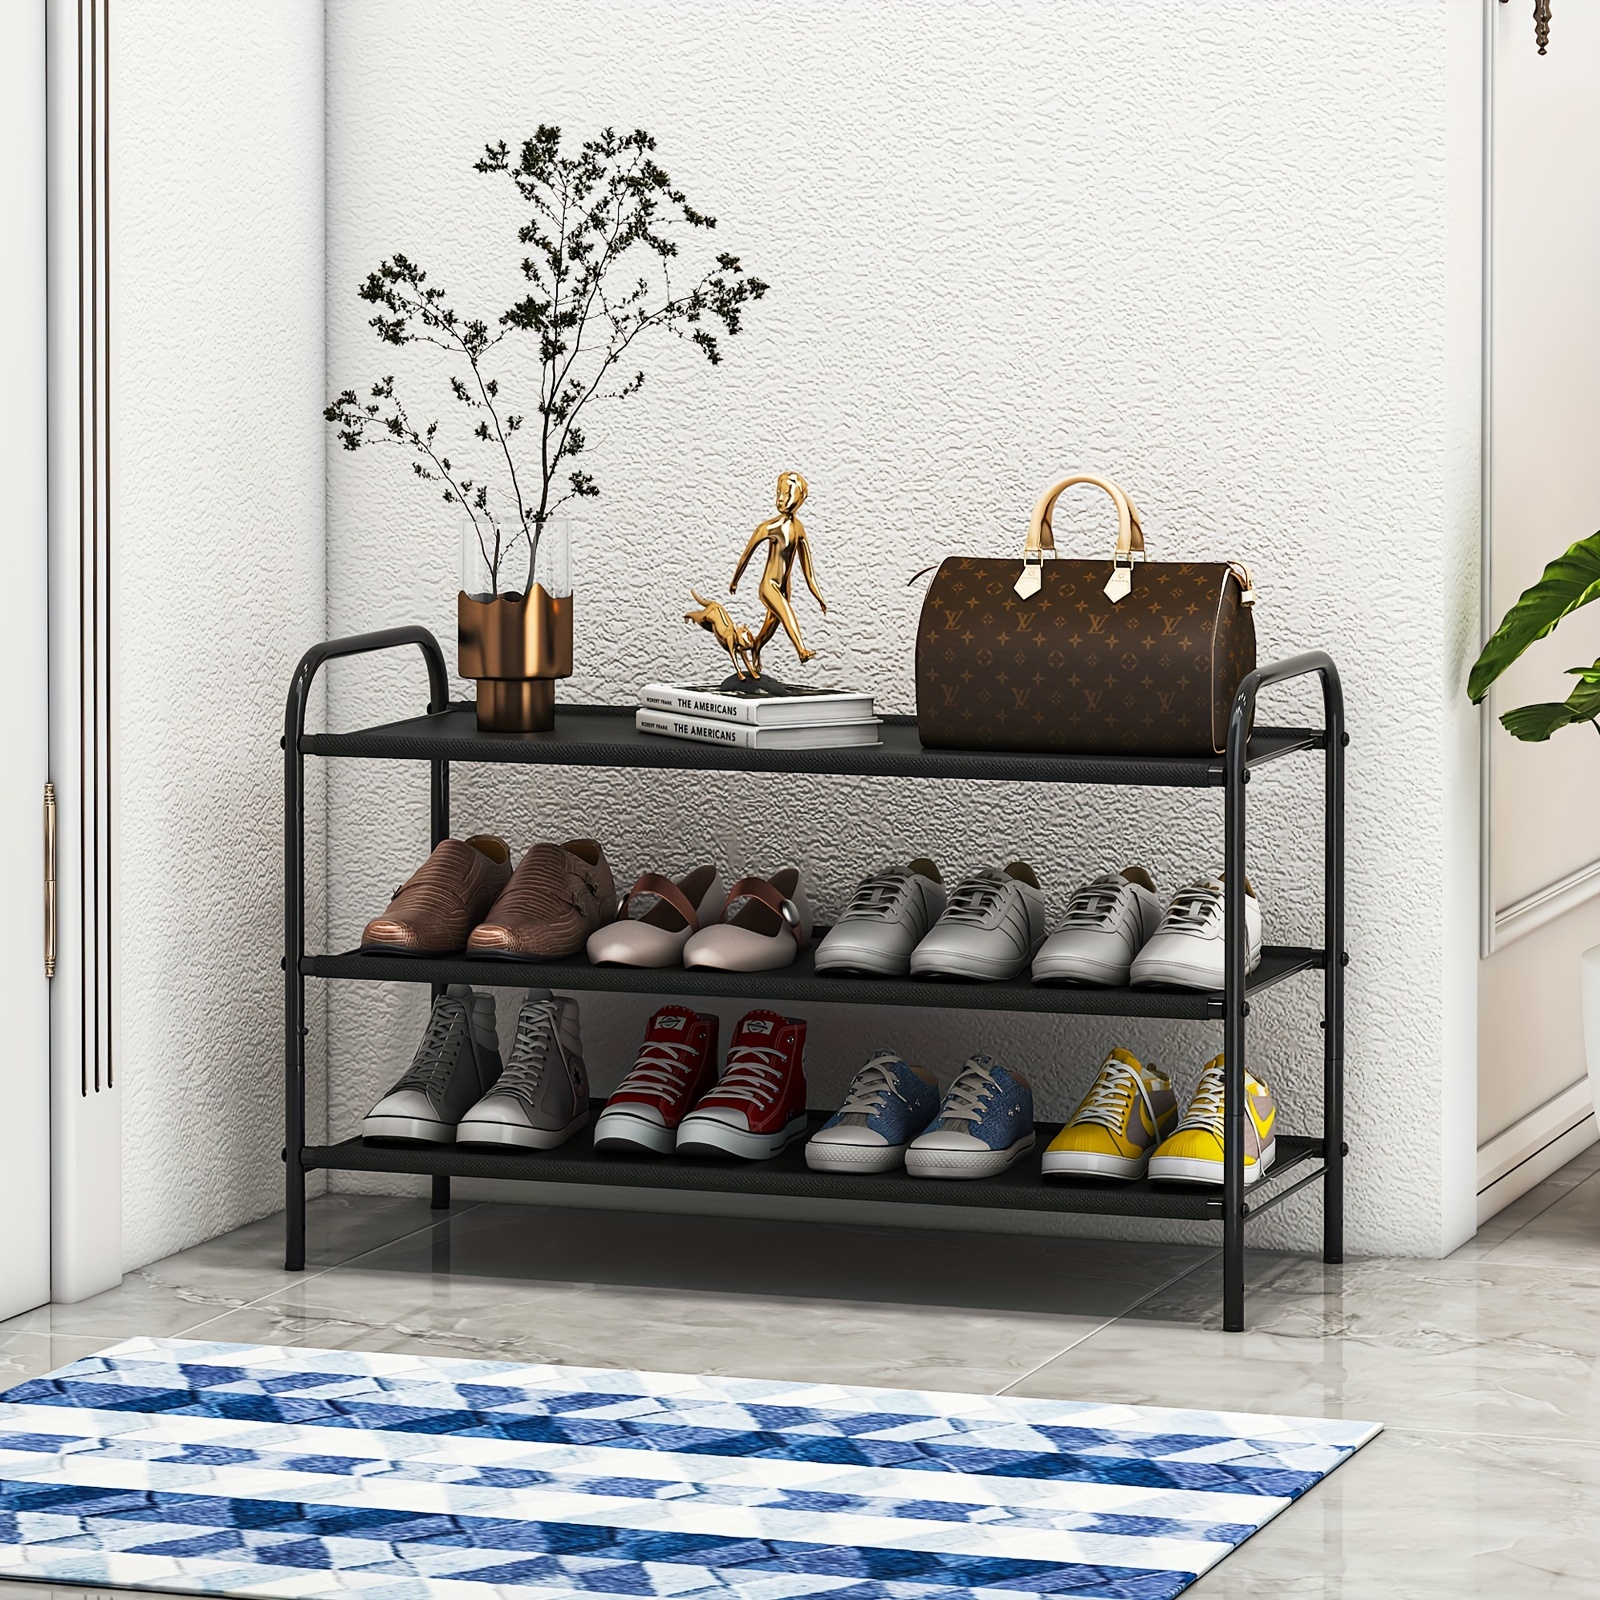 

3 Tier Stackable Shoe Rack Organizer Storage, Adjustable Fabric Shoe Shelf For Closet Closet Hallway Bedroom Entryway, Black